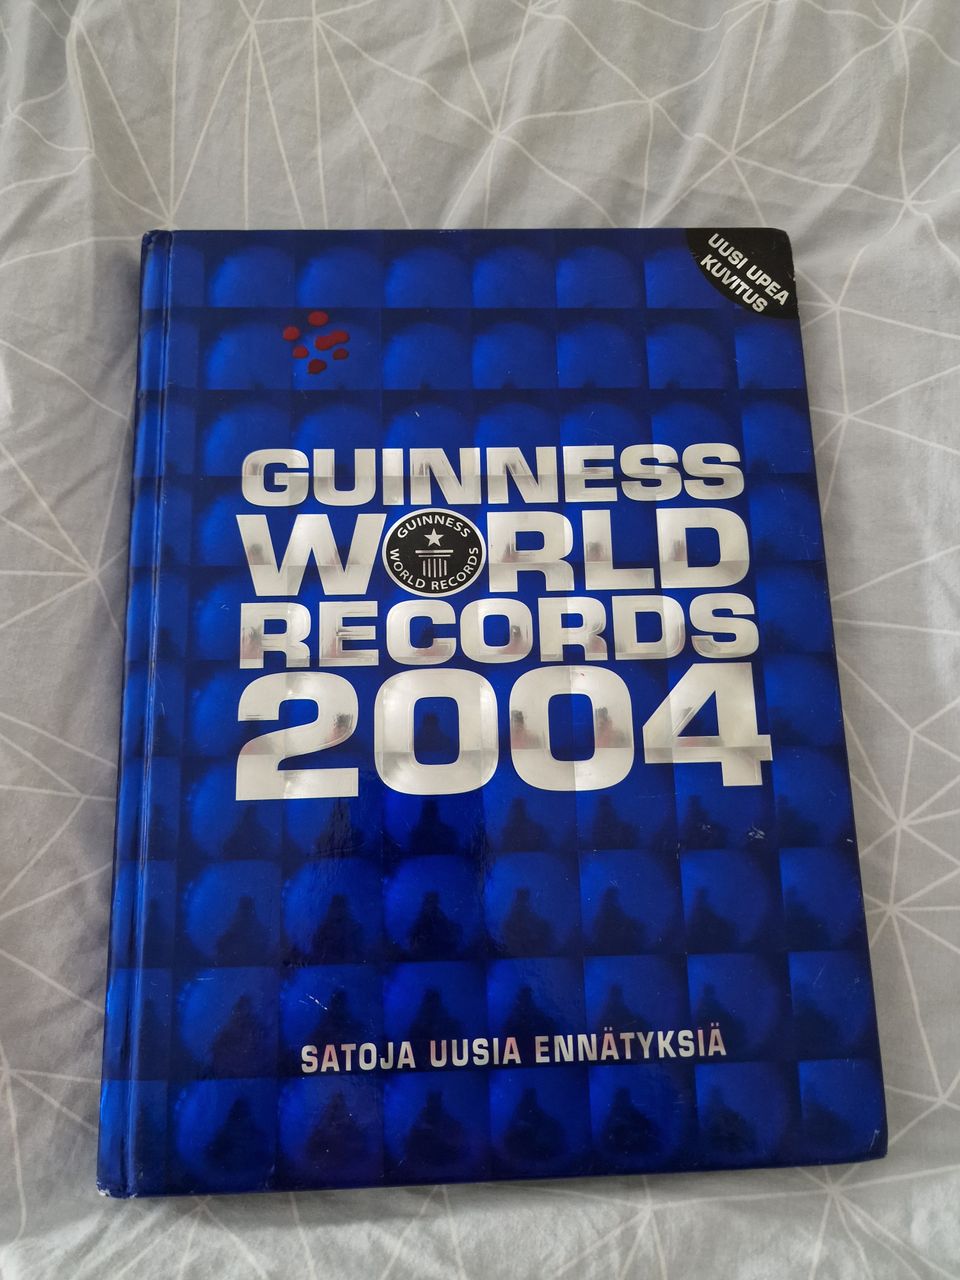 Guinness world records 2004